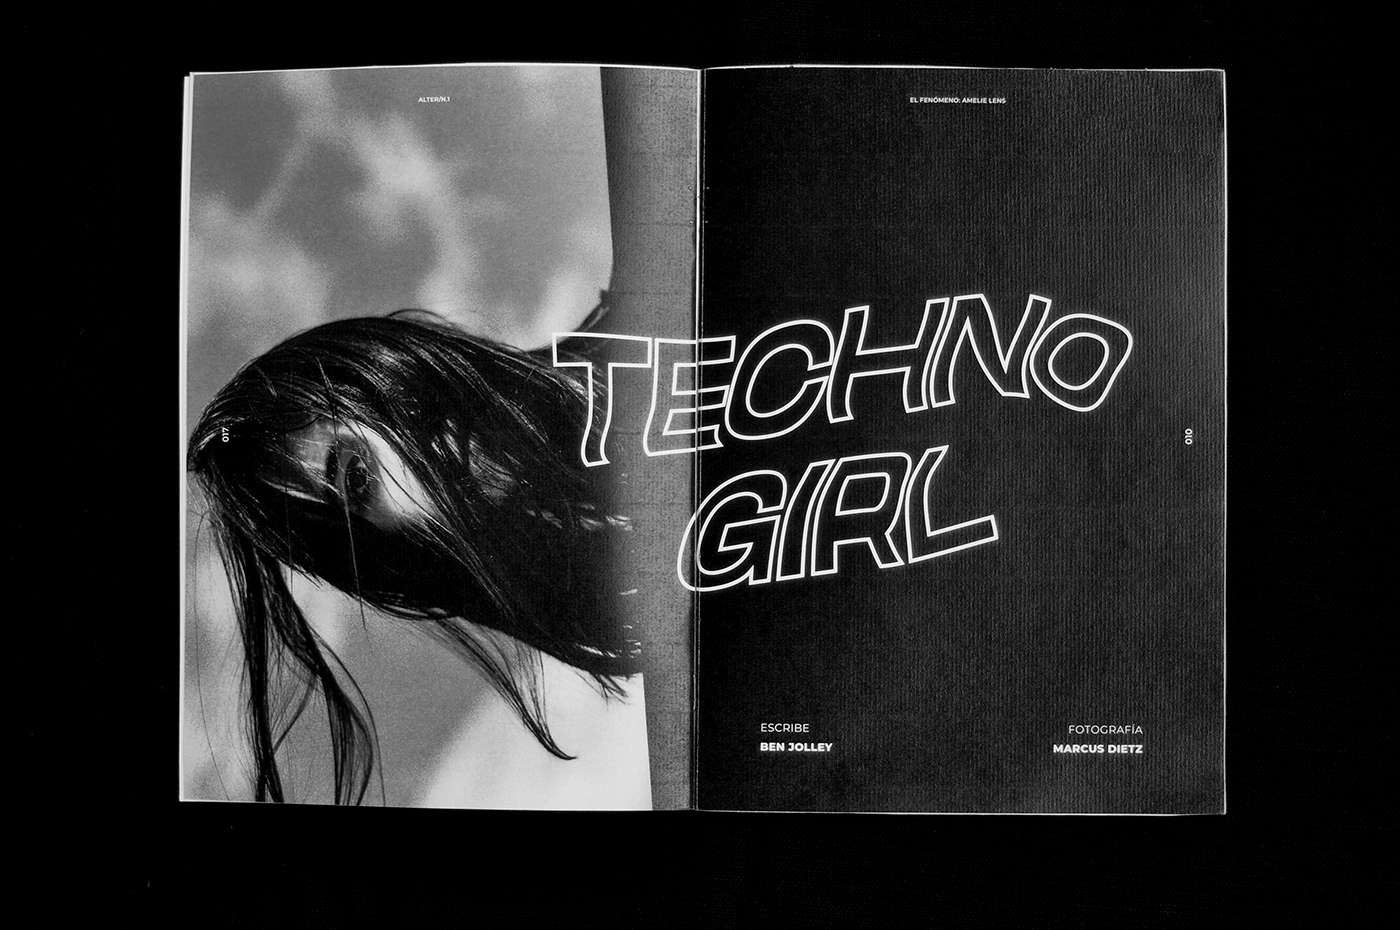 editorial magazine revista black and white electronic music musica electronica tipografia typography   mag revista cosgaya